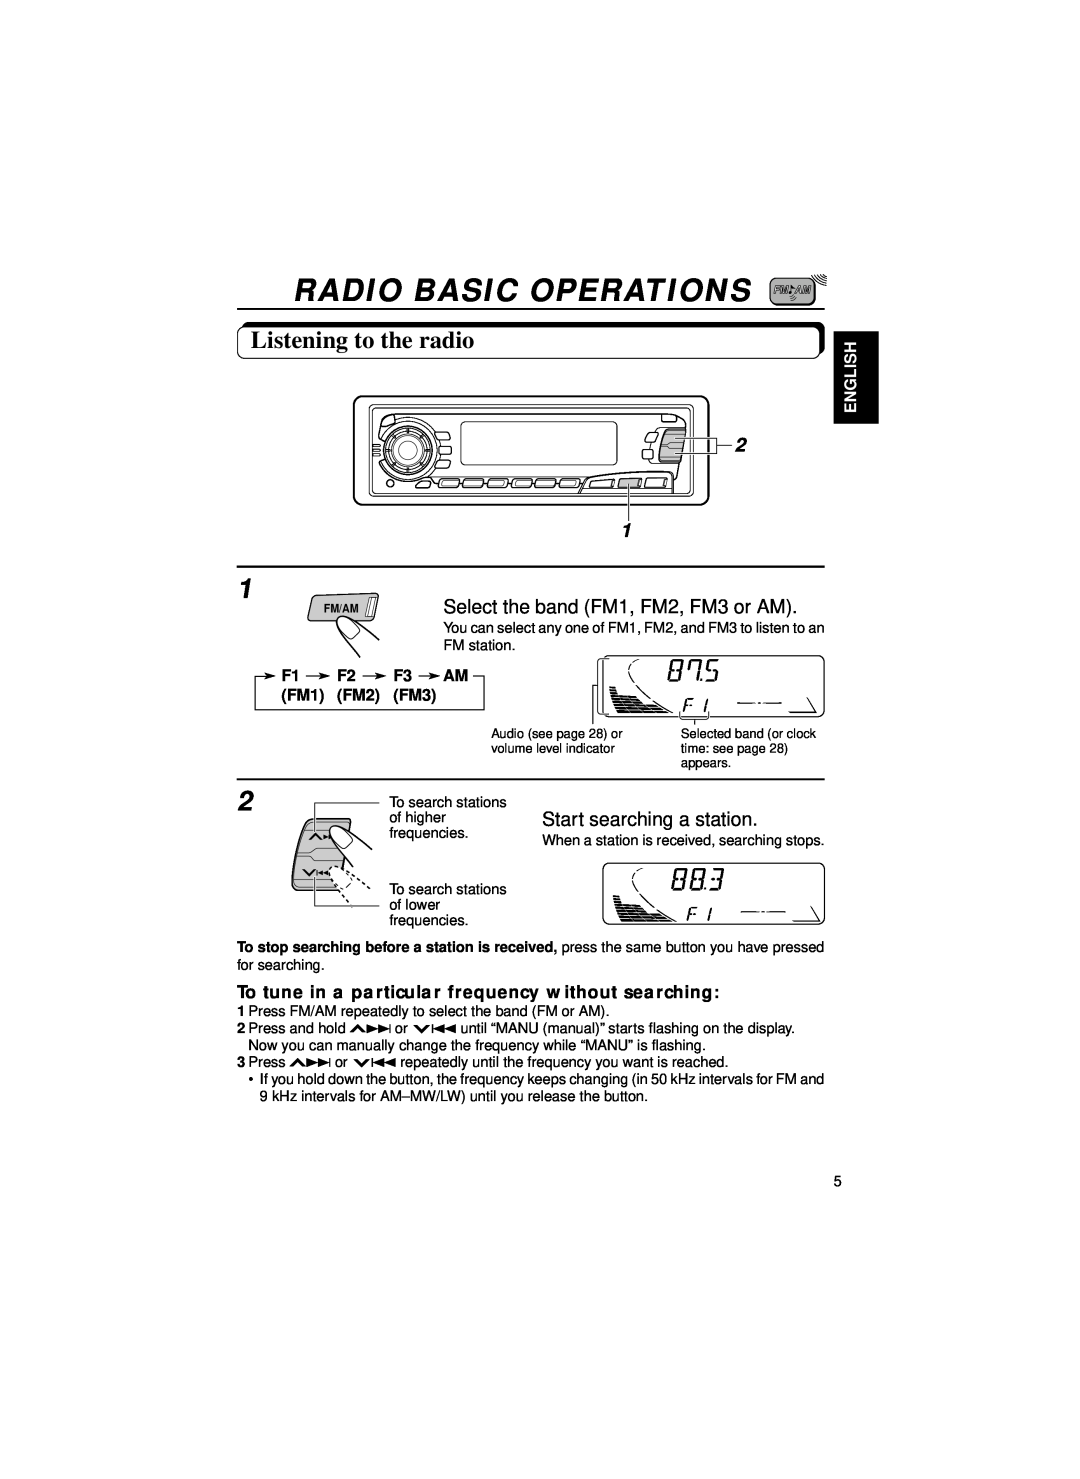 JVC KS-FX820R Radio Basic Operations, Listening to the radio, Select the band FM1, FM2, FM3 or AM, F1 F2 F3 AM FM1 FM2 FM3 